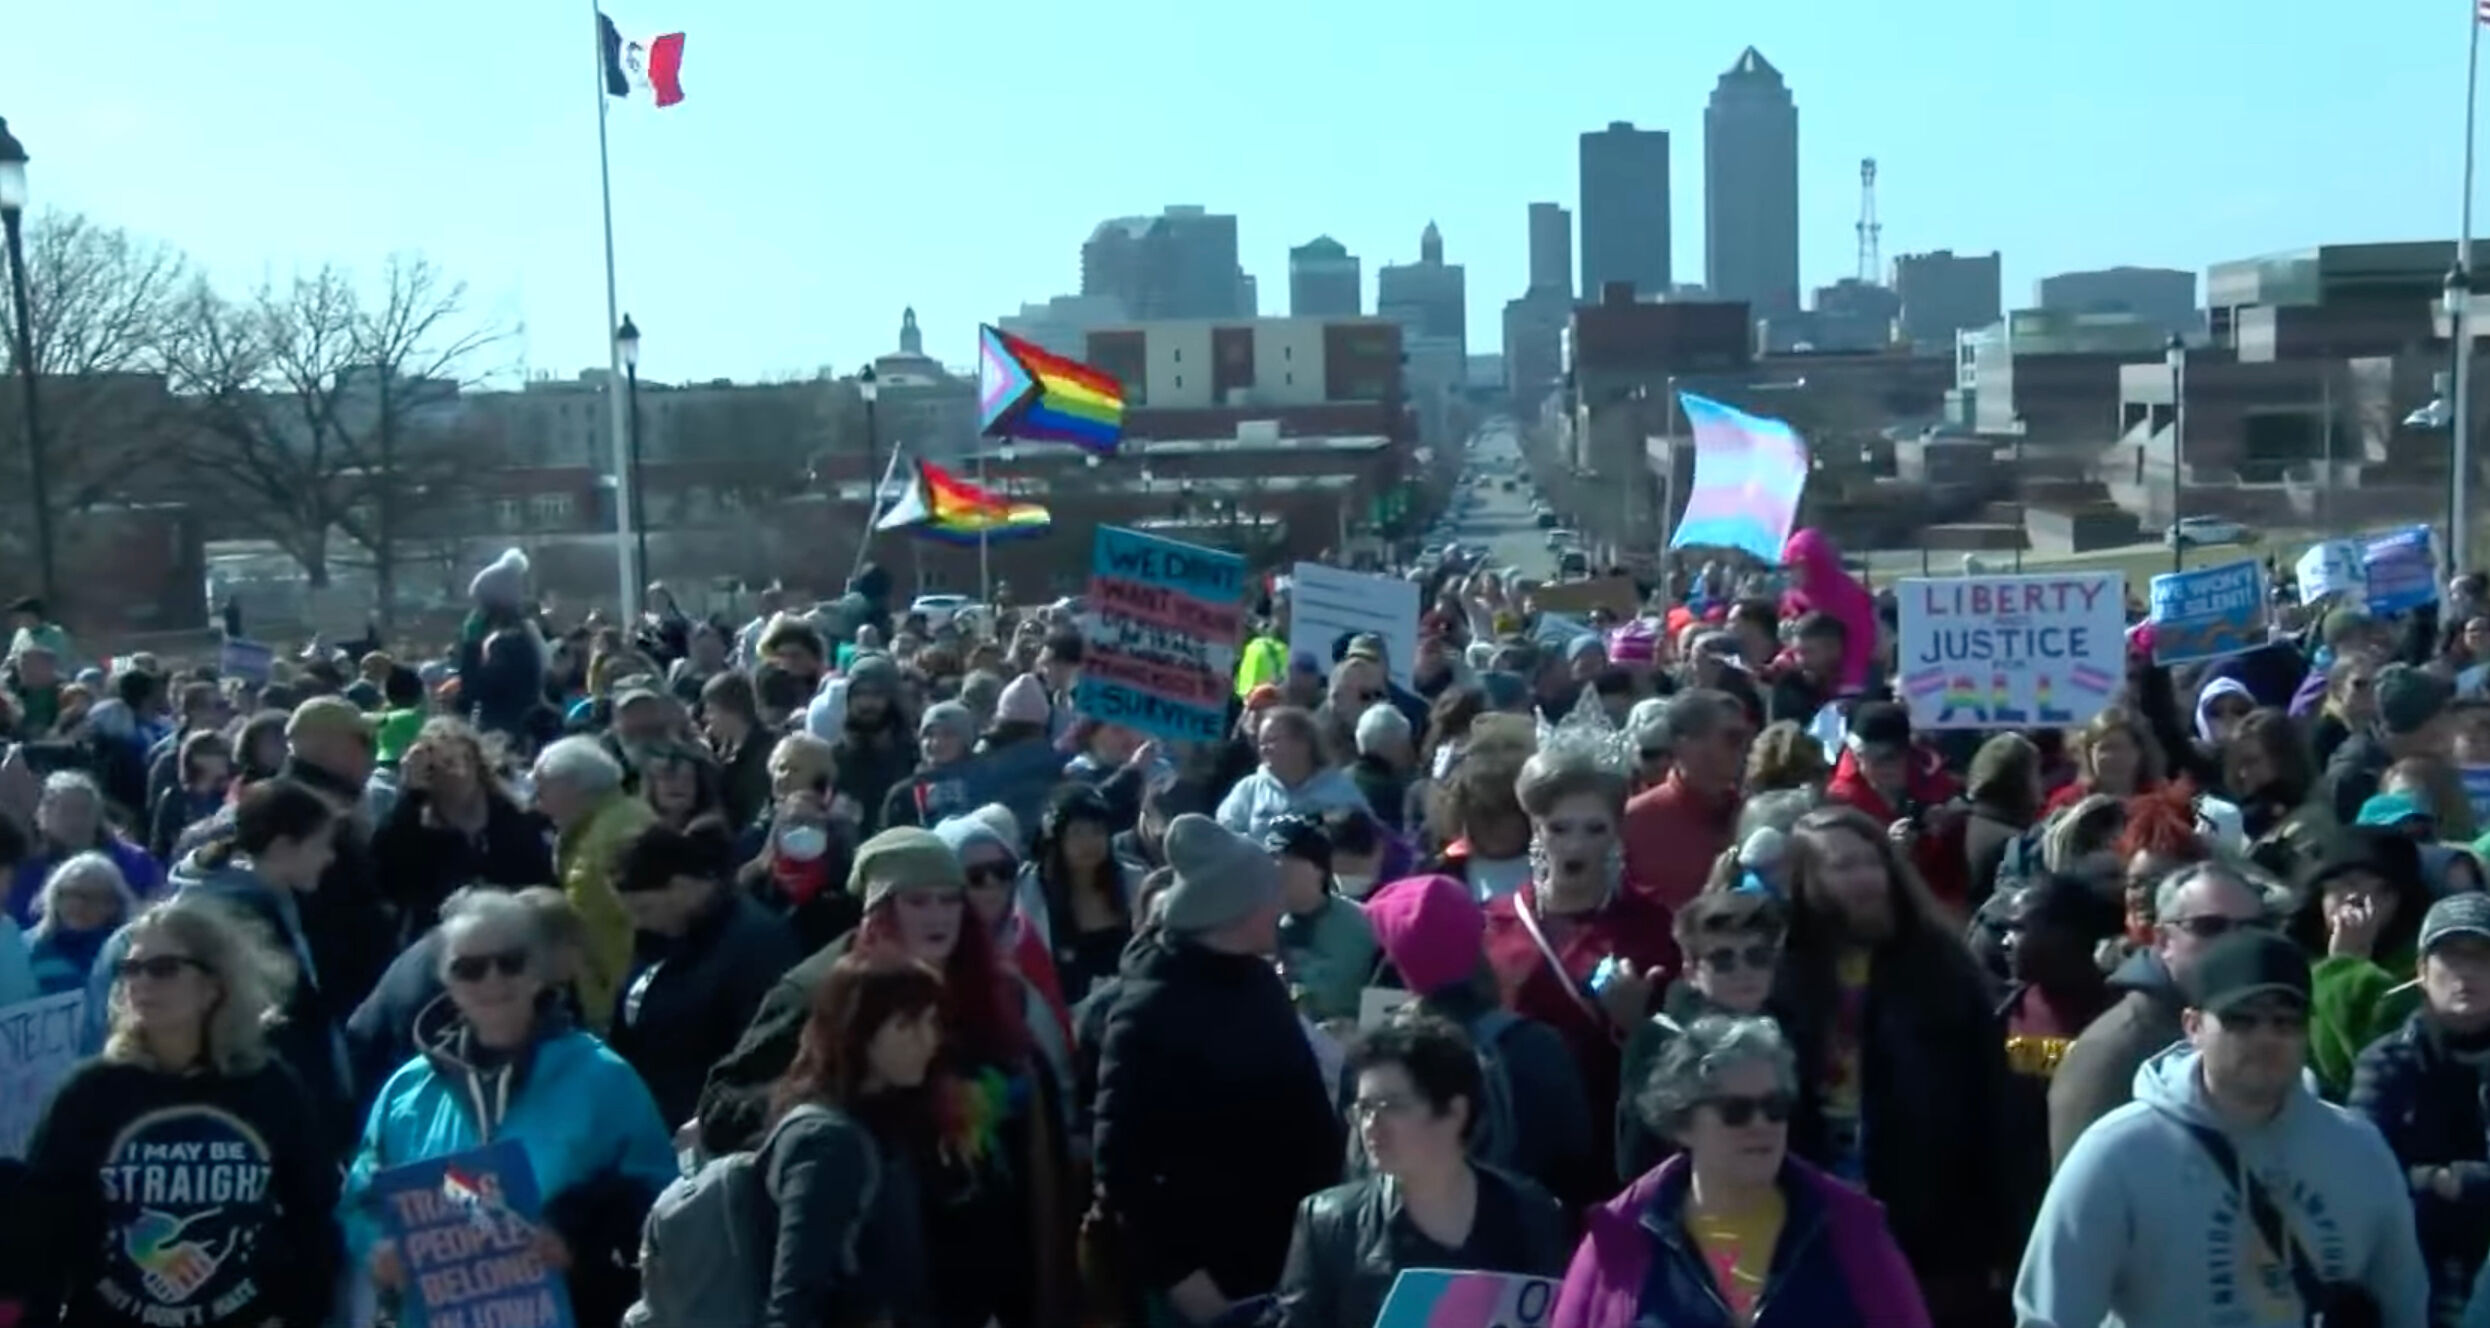 LGBTQ+ advocates gathered at the Iowa State Capitol last Sunday to protest discriminatory legislation.